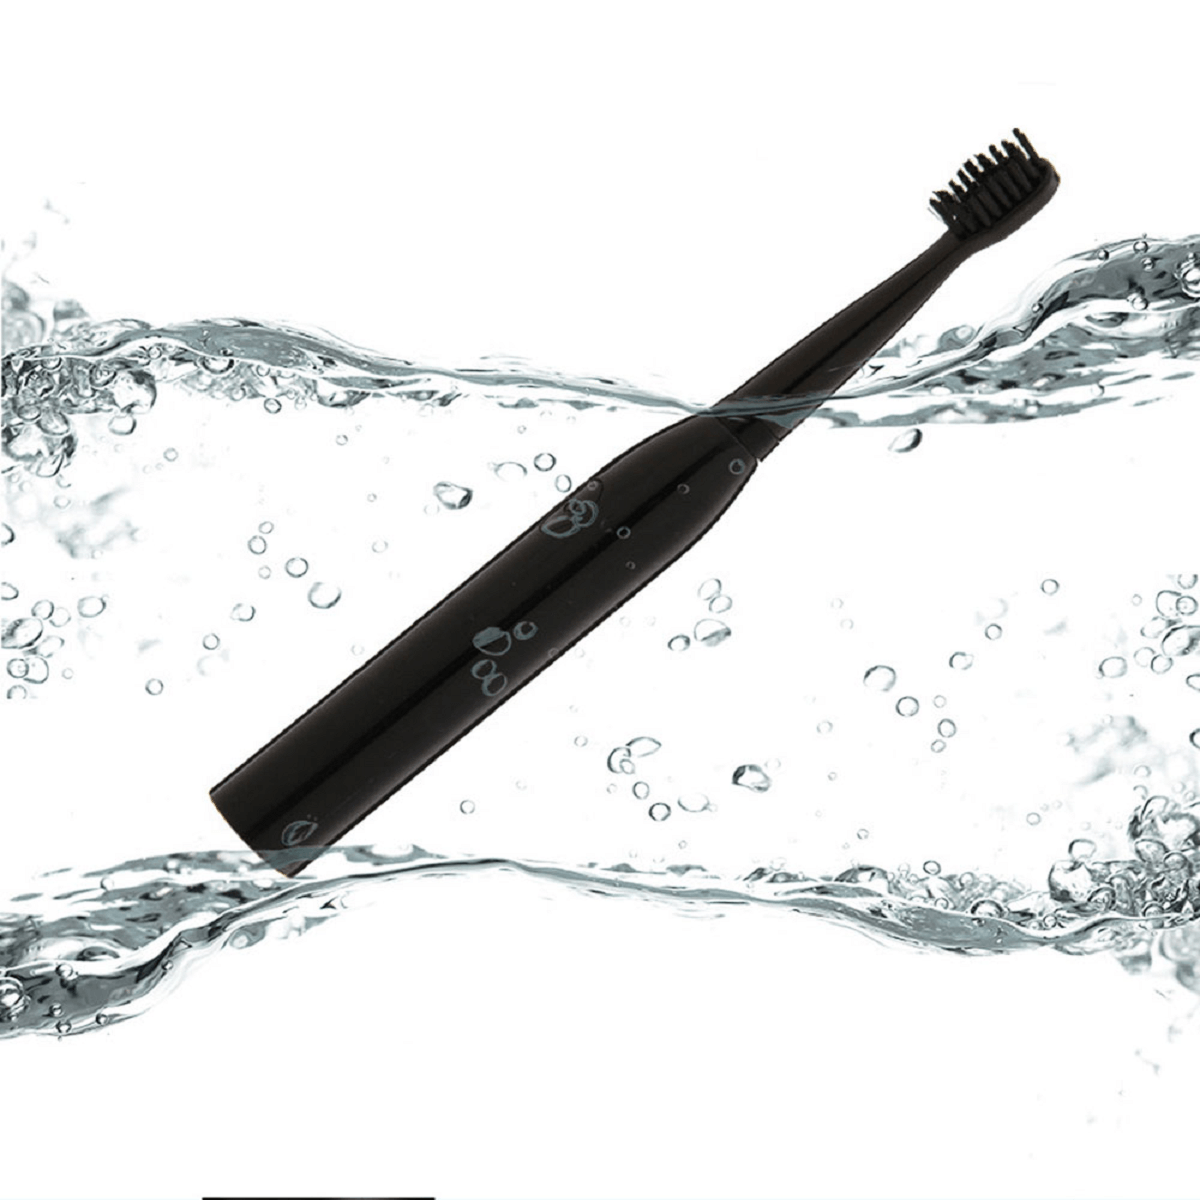 Ultrasonic Battery Operated Electric Toothbrush - Waterproof - dealskart.com.au